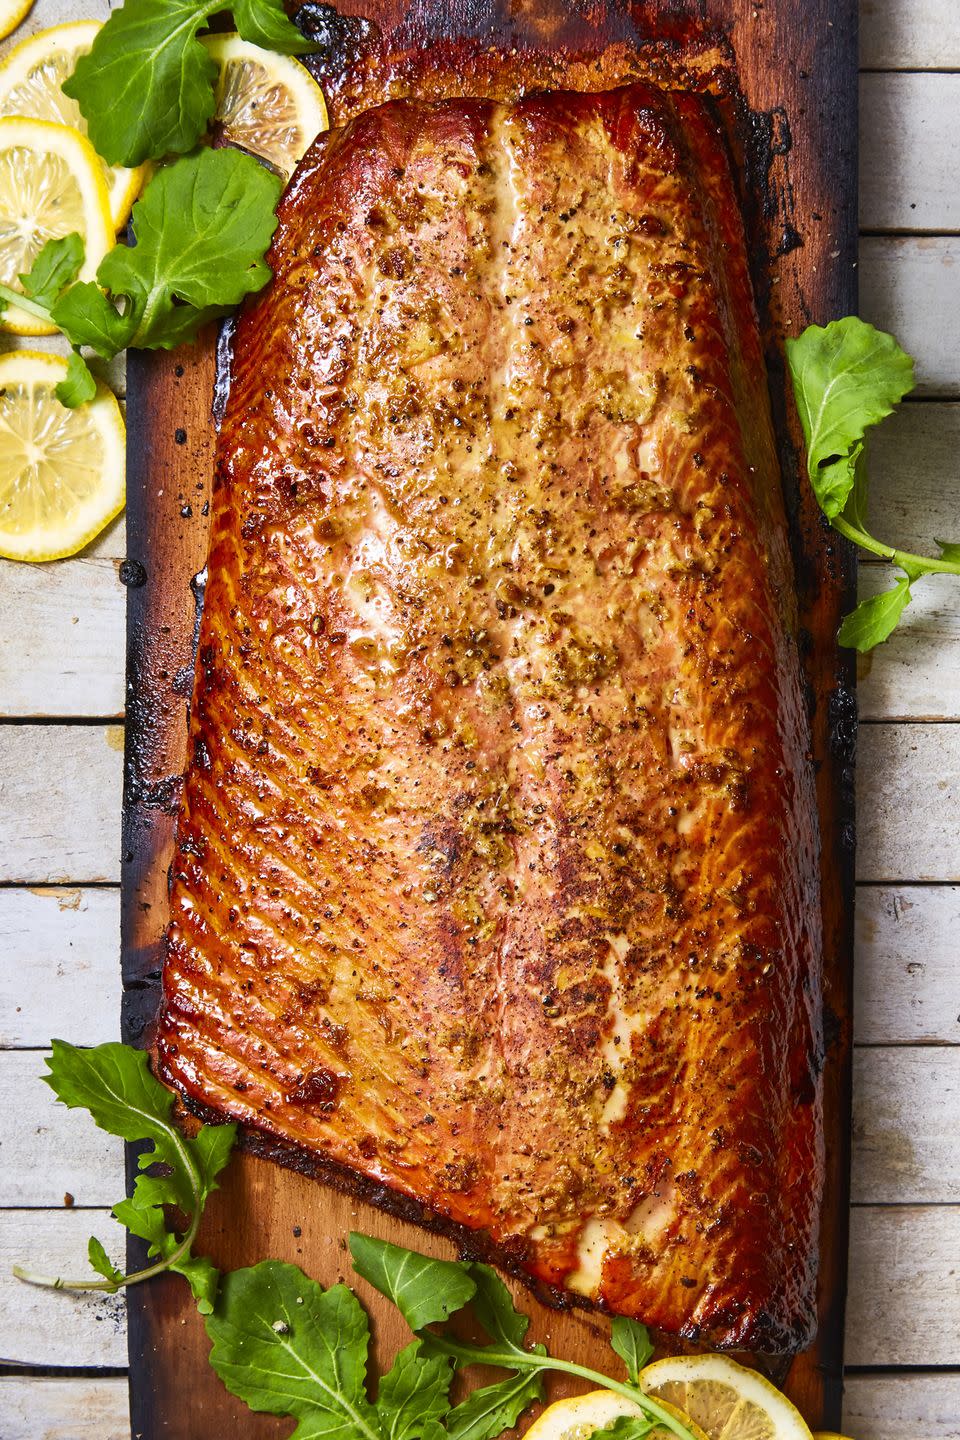 salmon health benefits